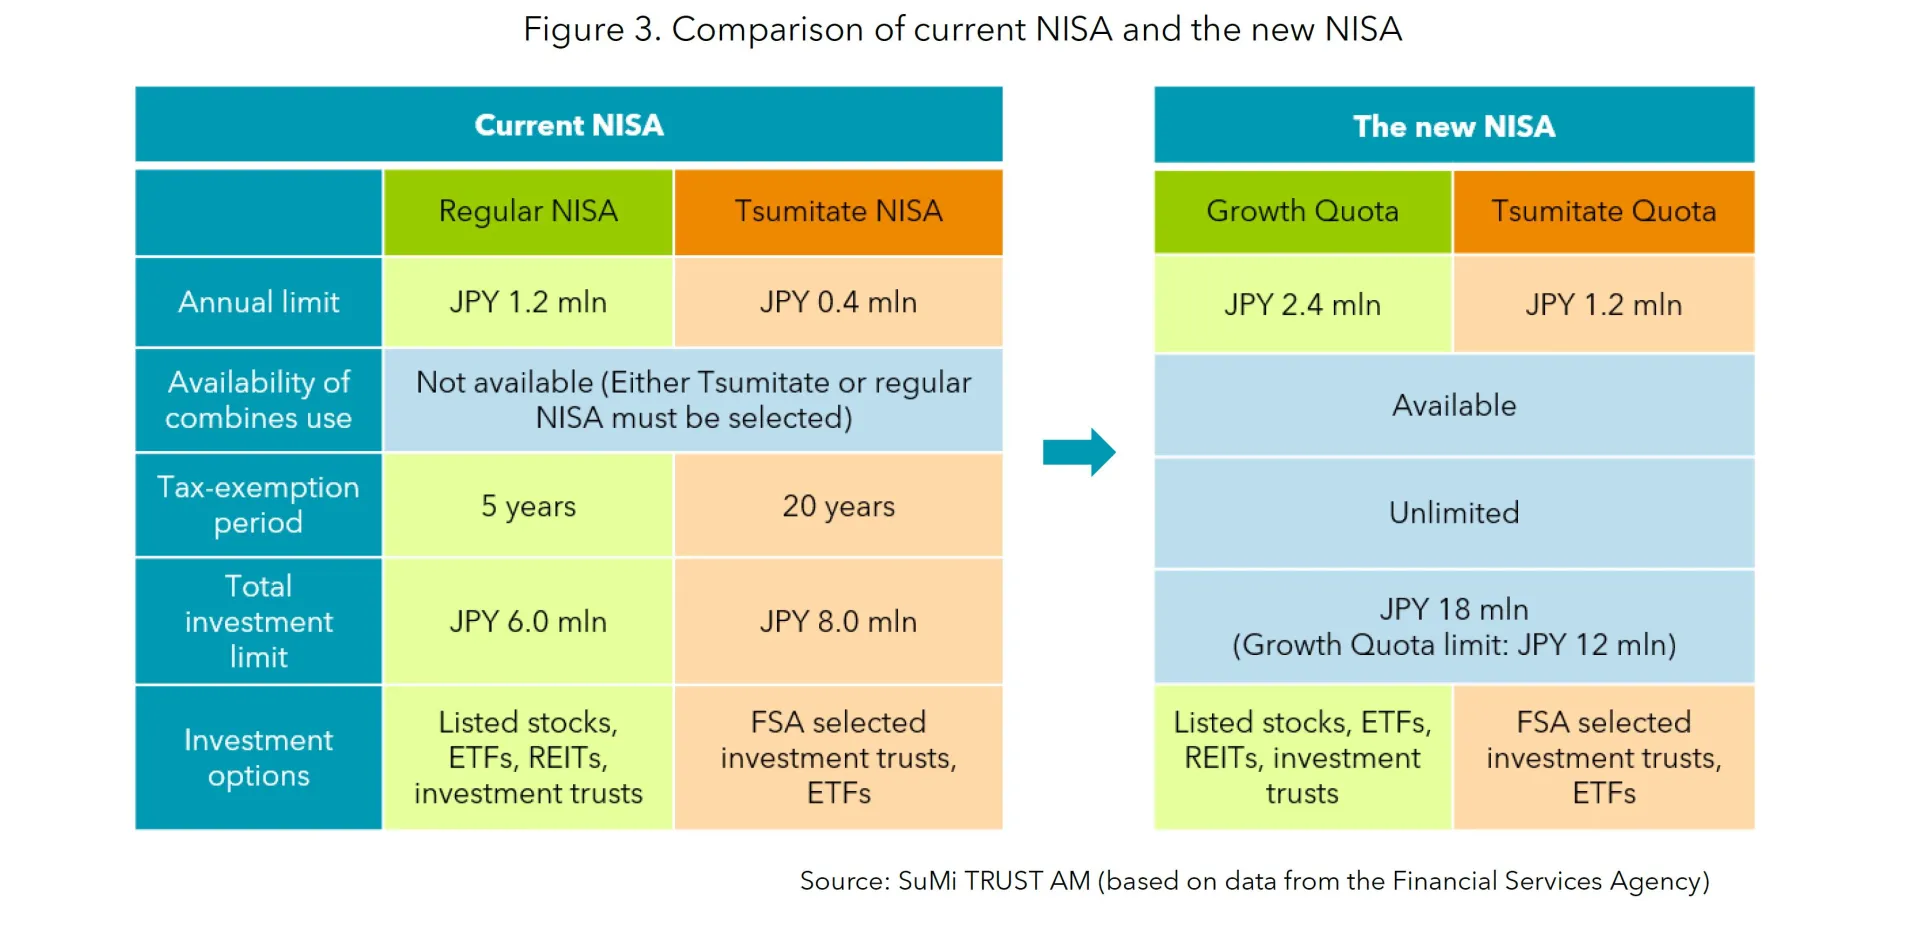 Figure 3 Comparison of NISA